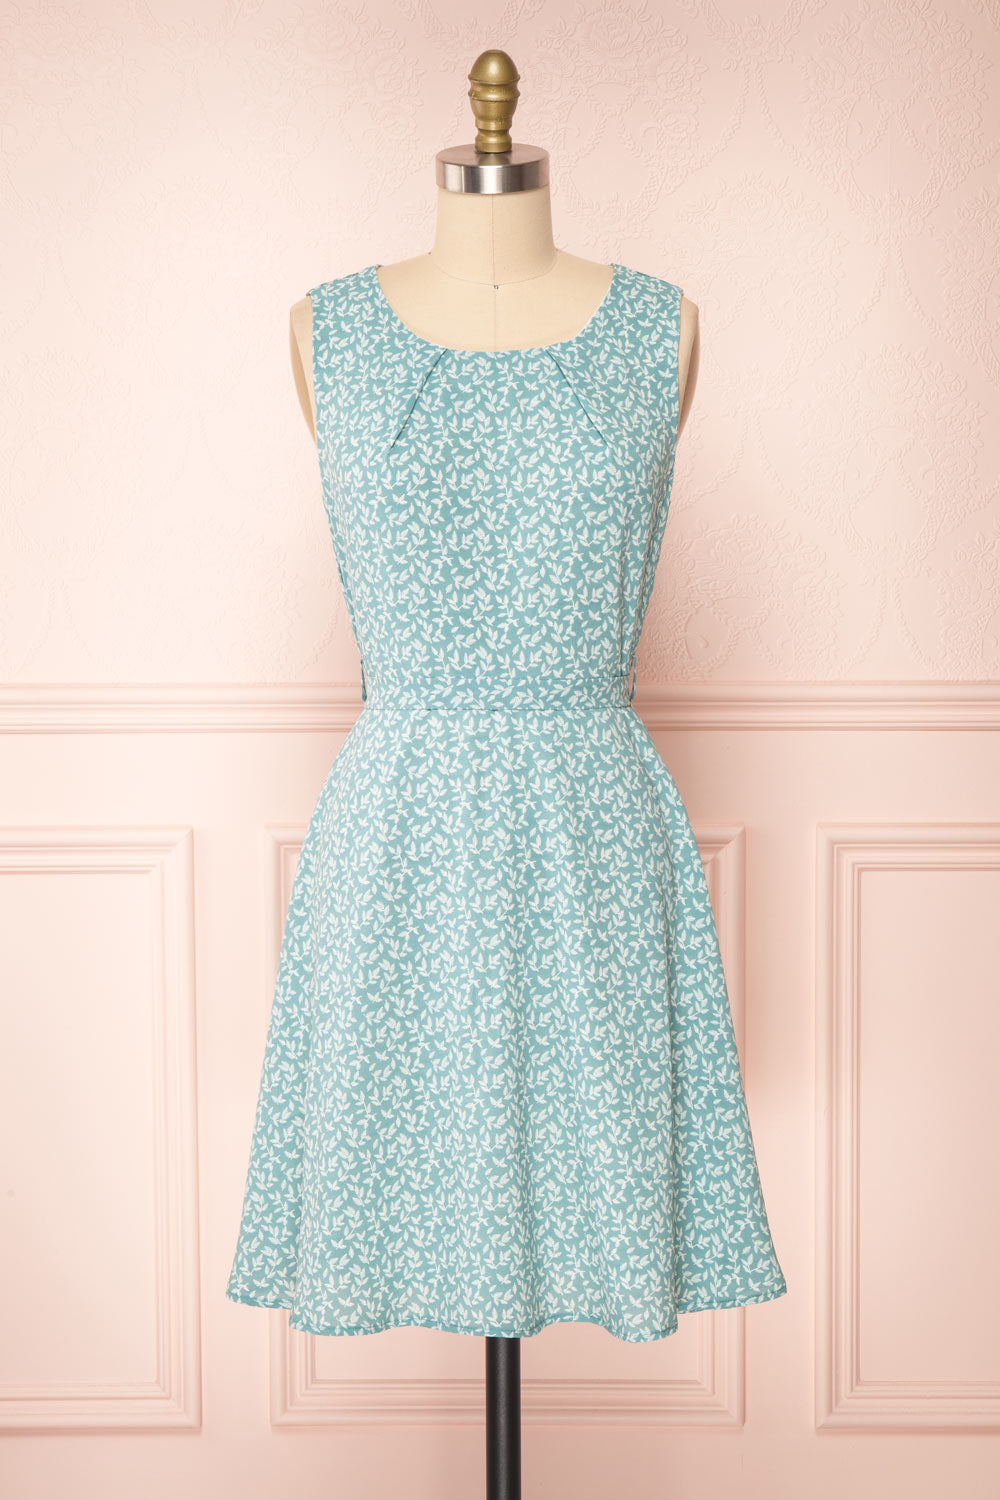 Naroa Mint Patterned Dress A-Line Short Dress | Boutique 1861 front view